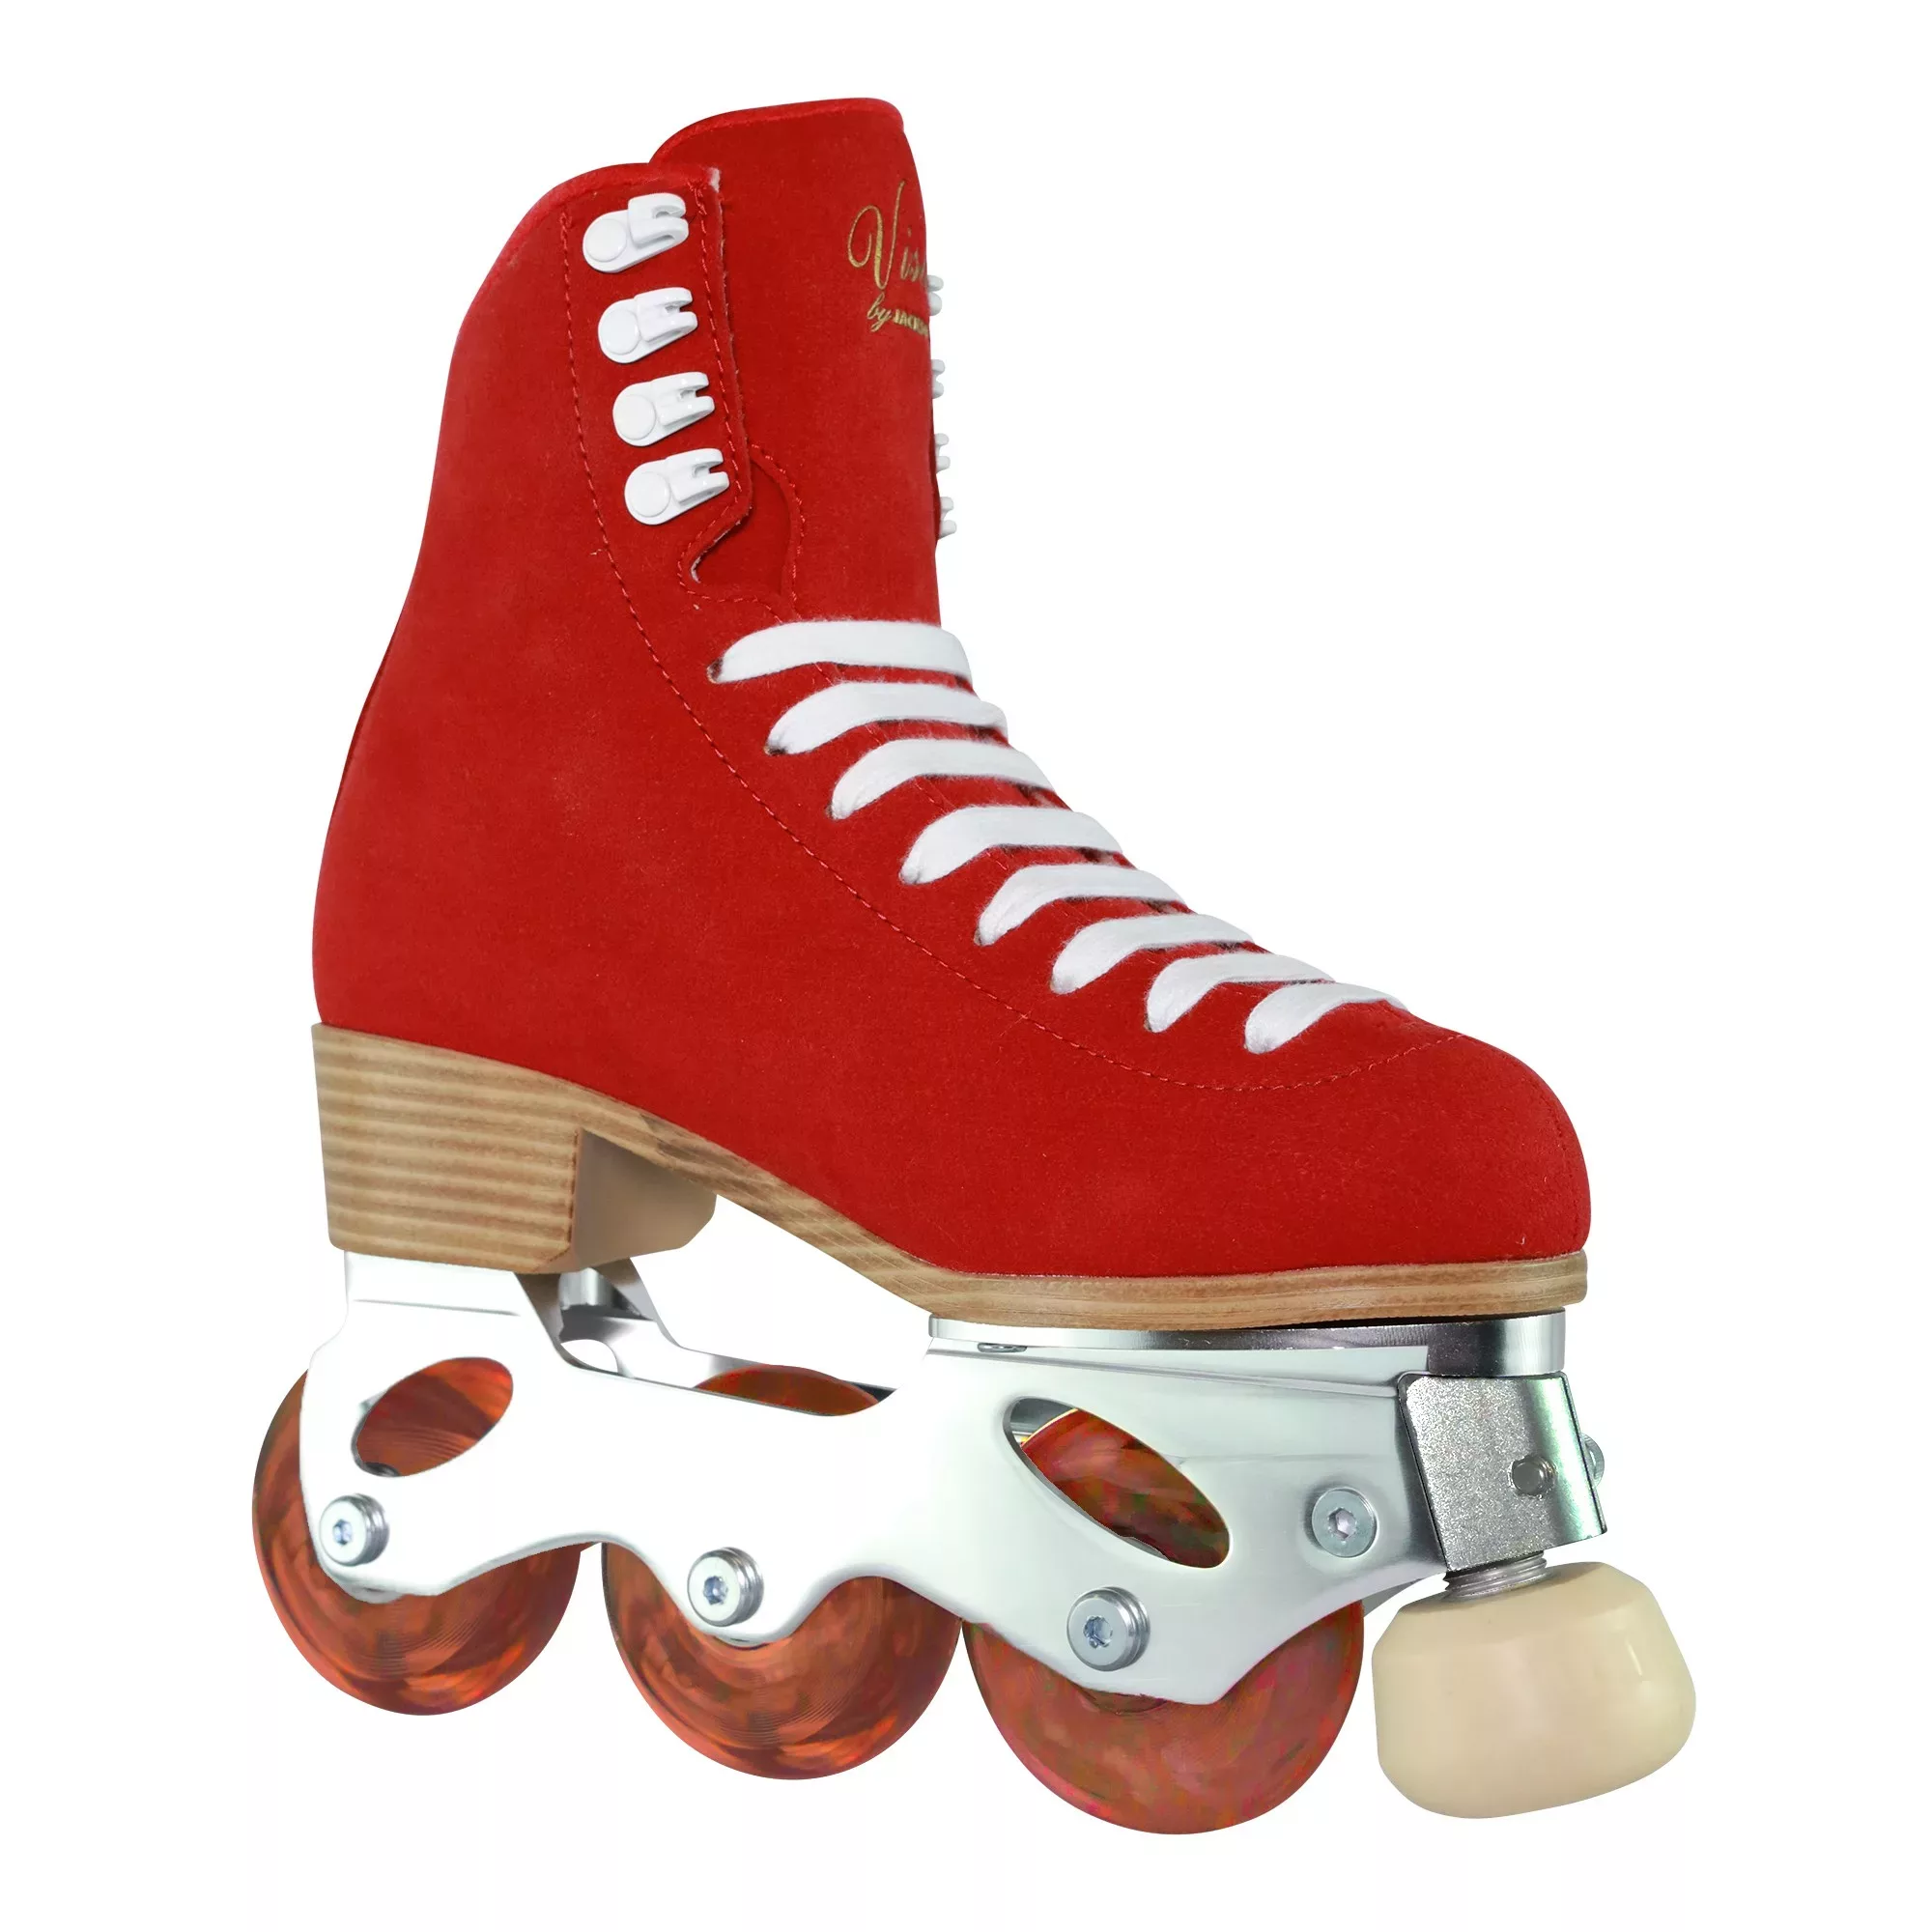 Jackson Ultima Vista PA500 Women’s Inline Roller Skates Red Inline Skates